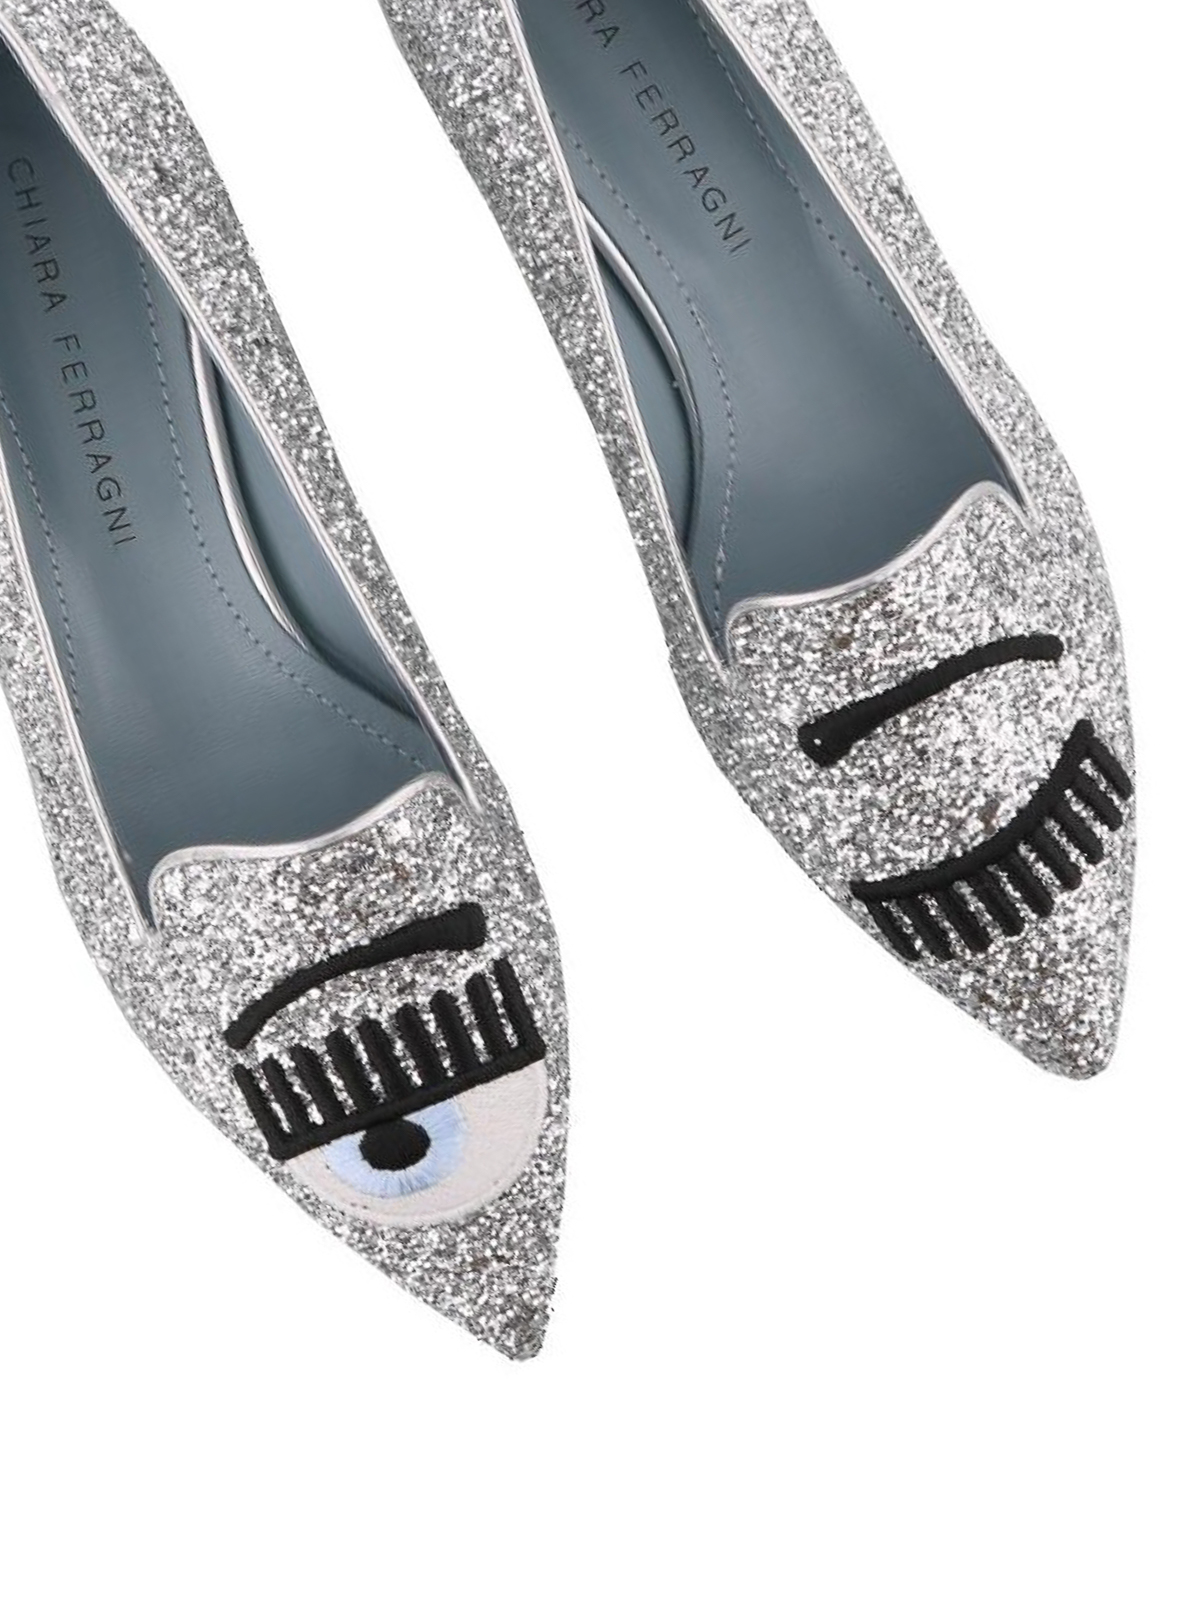 Flat shoes Chiara Ferragni - Flirting silver glitter flat pointy shoes -  CF2010